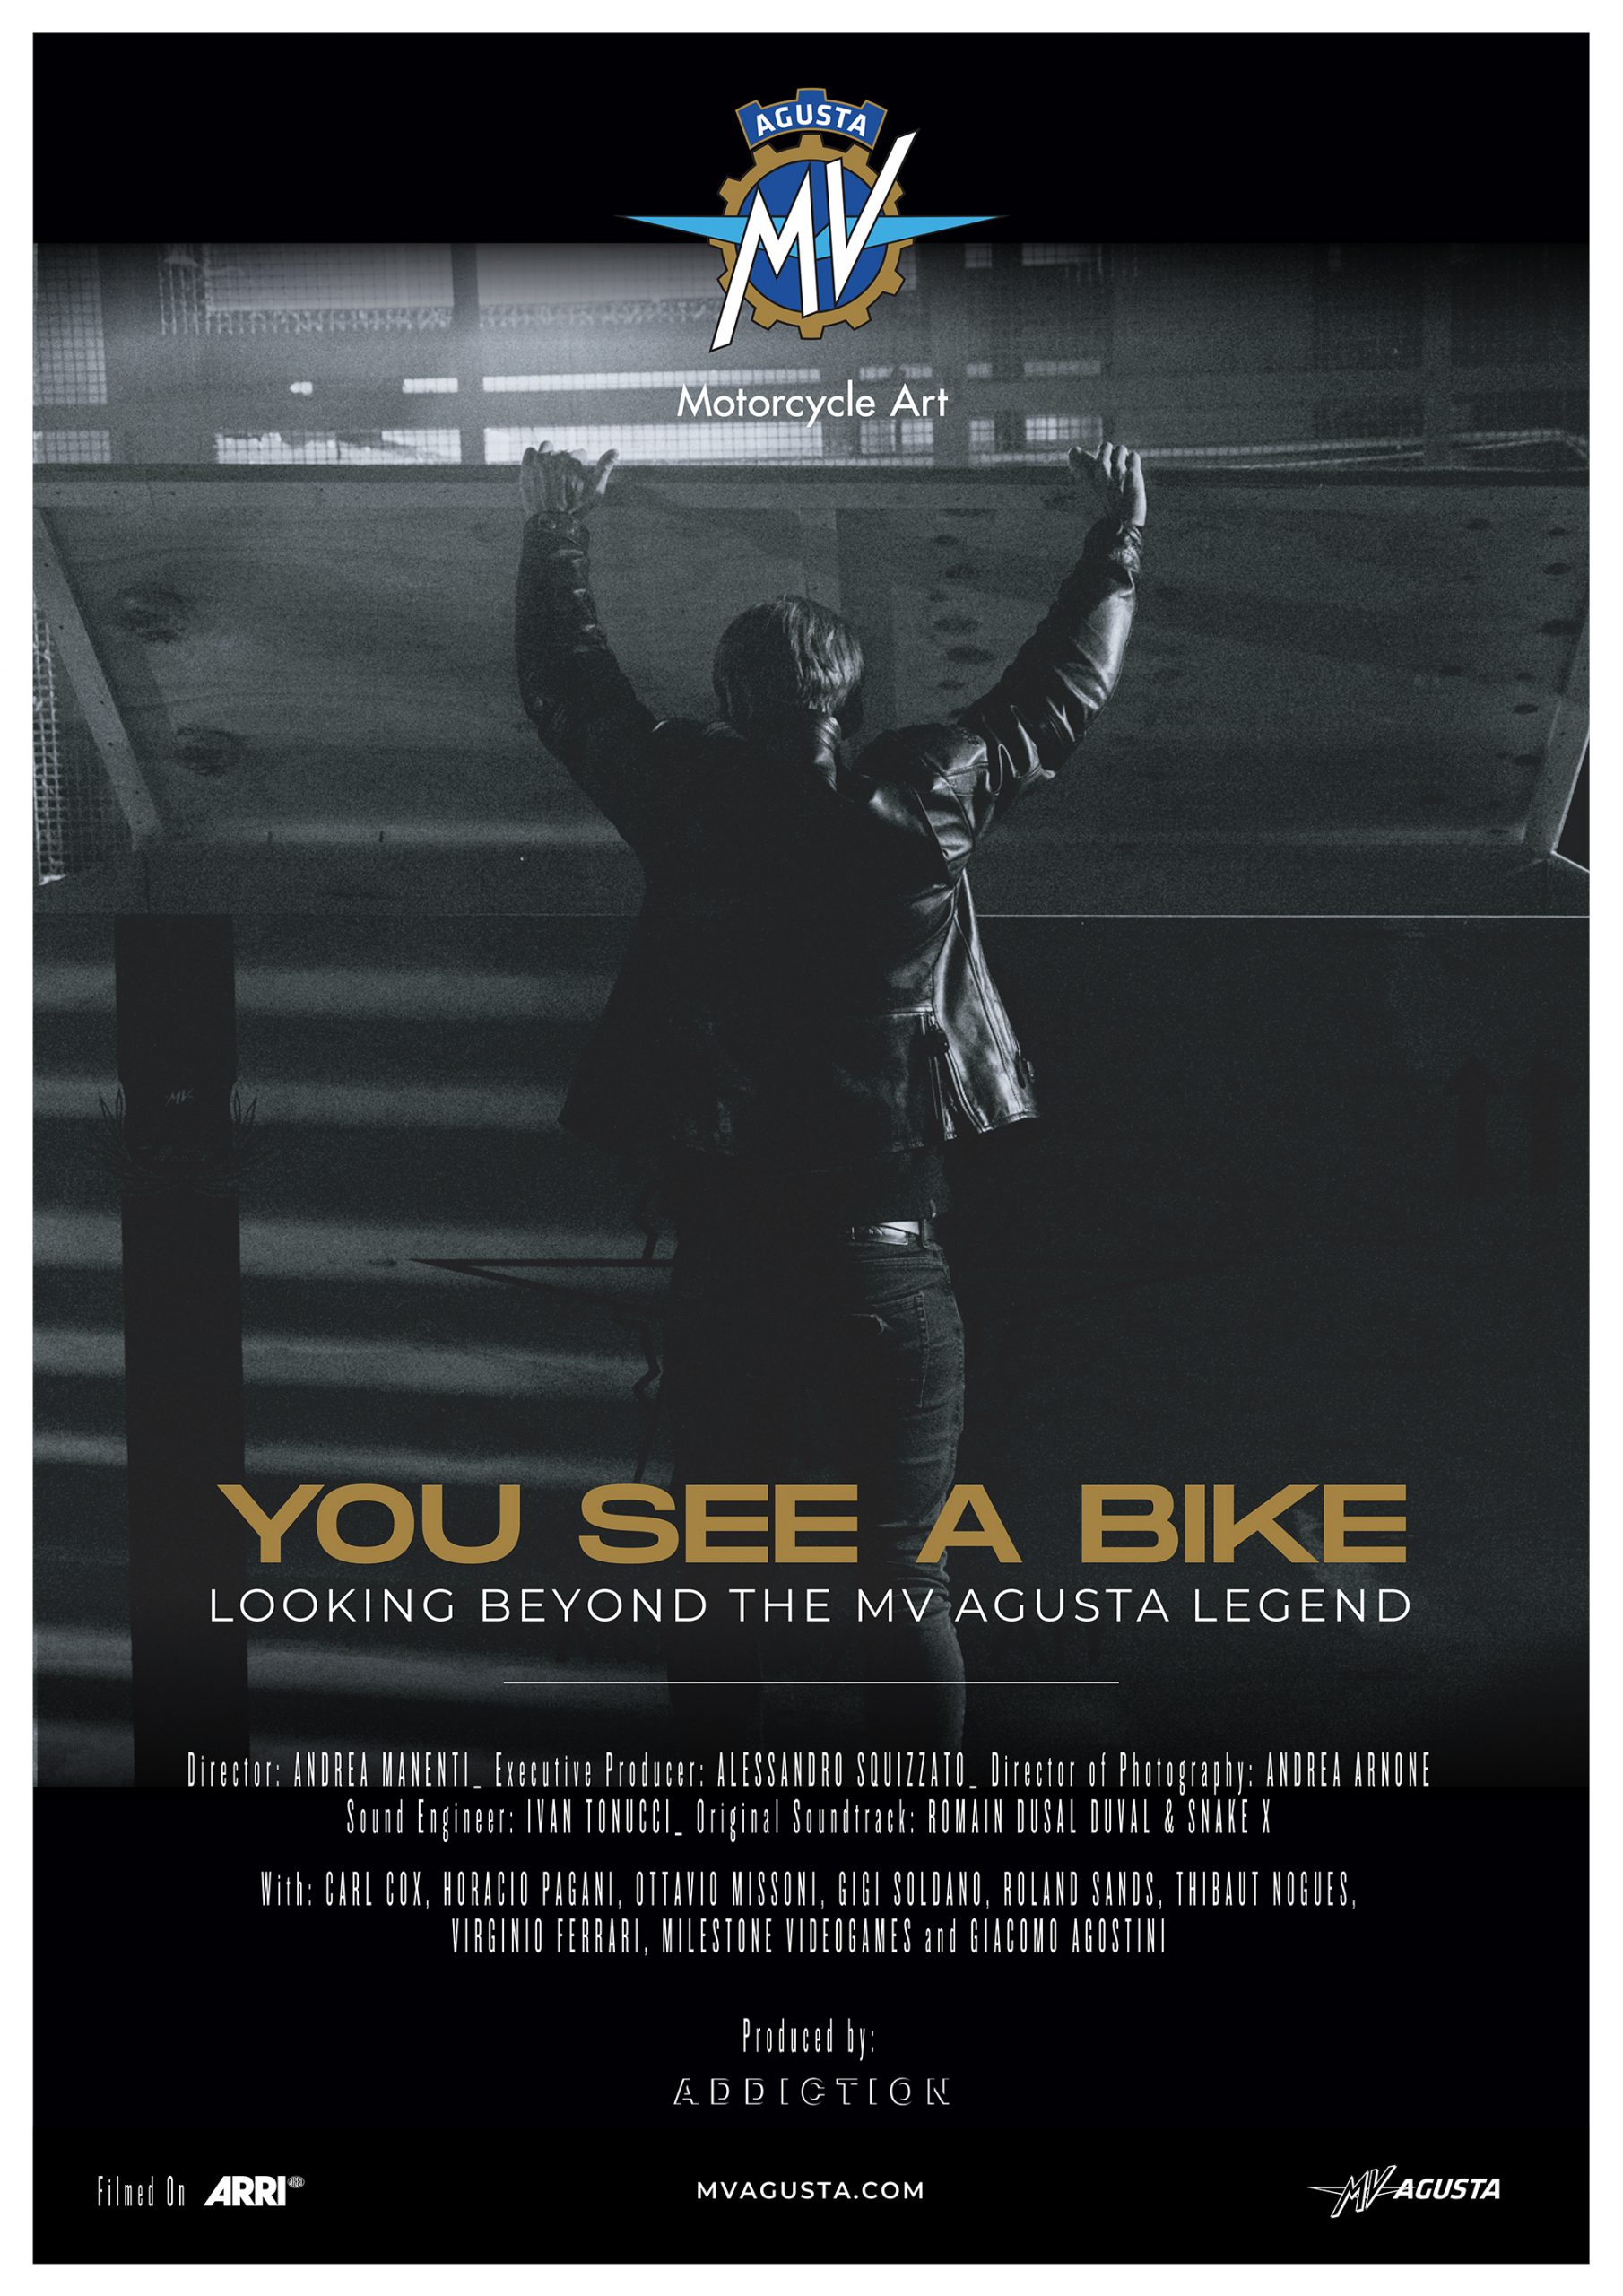 MV Agusta - Your See a Bike